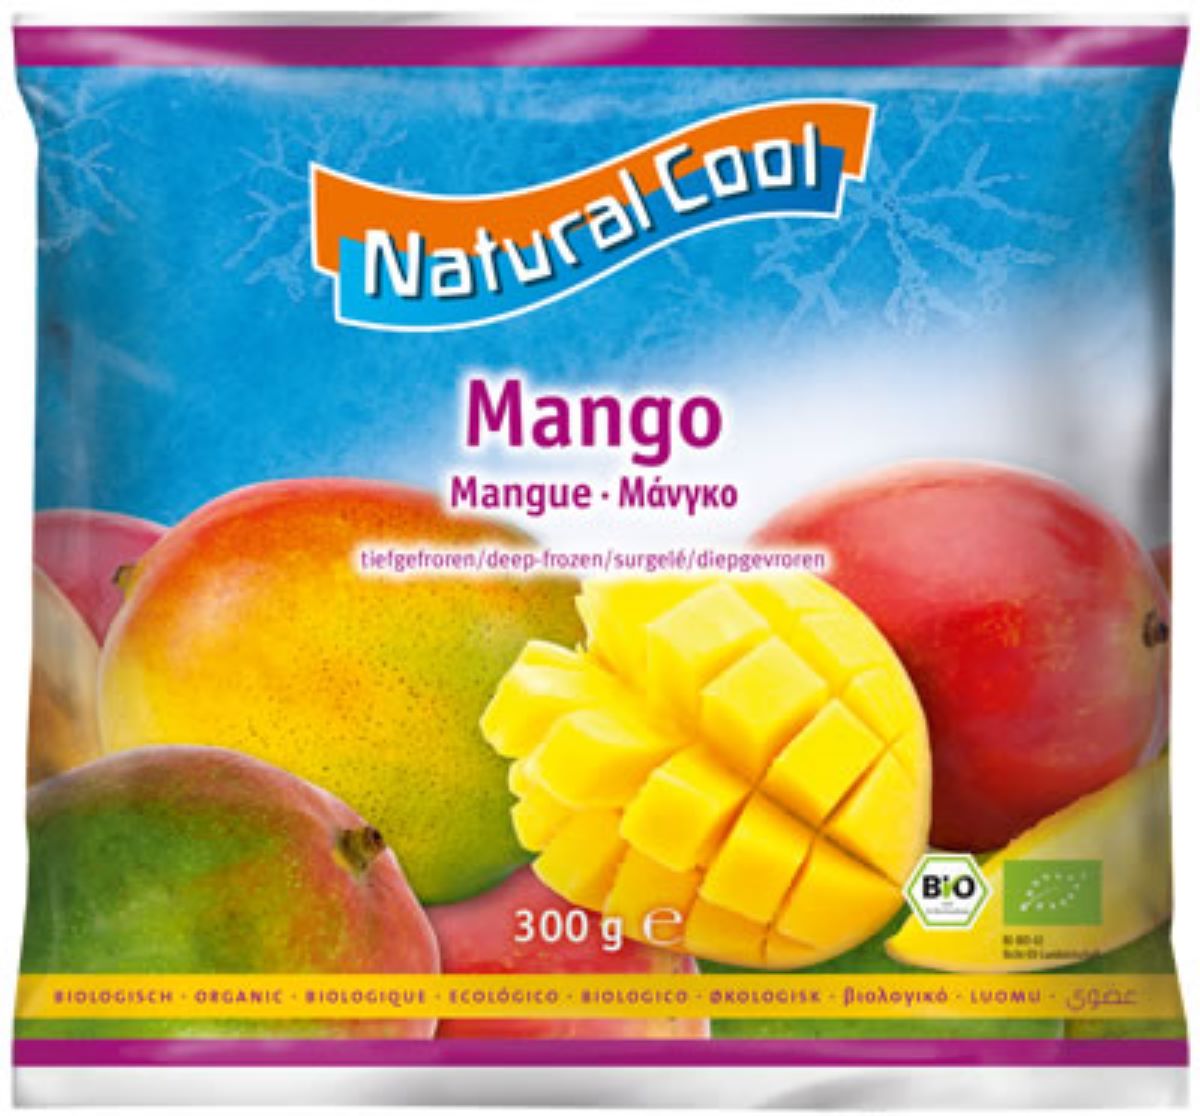 Natural Cool Organic Mango 300g